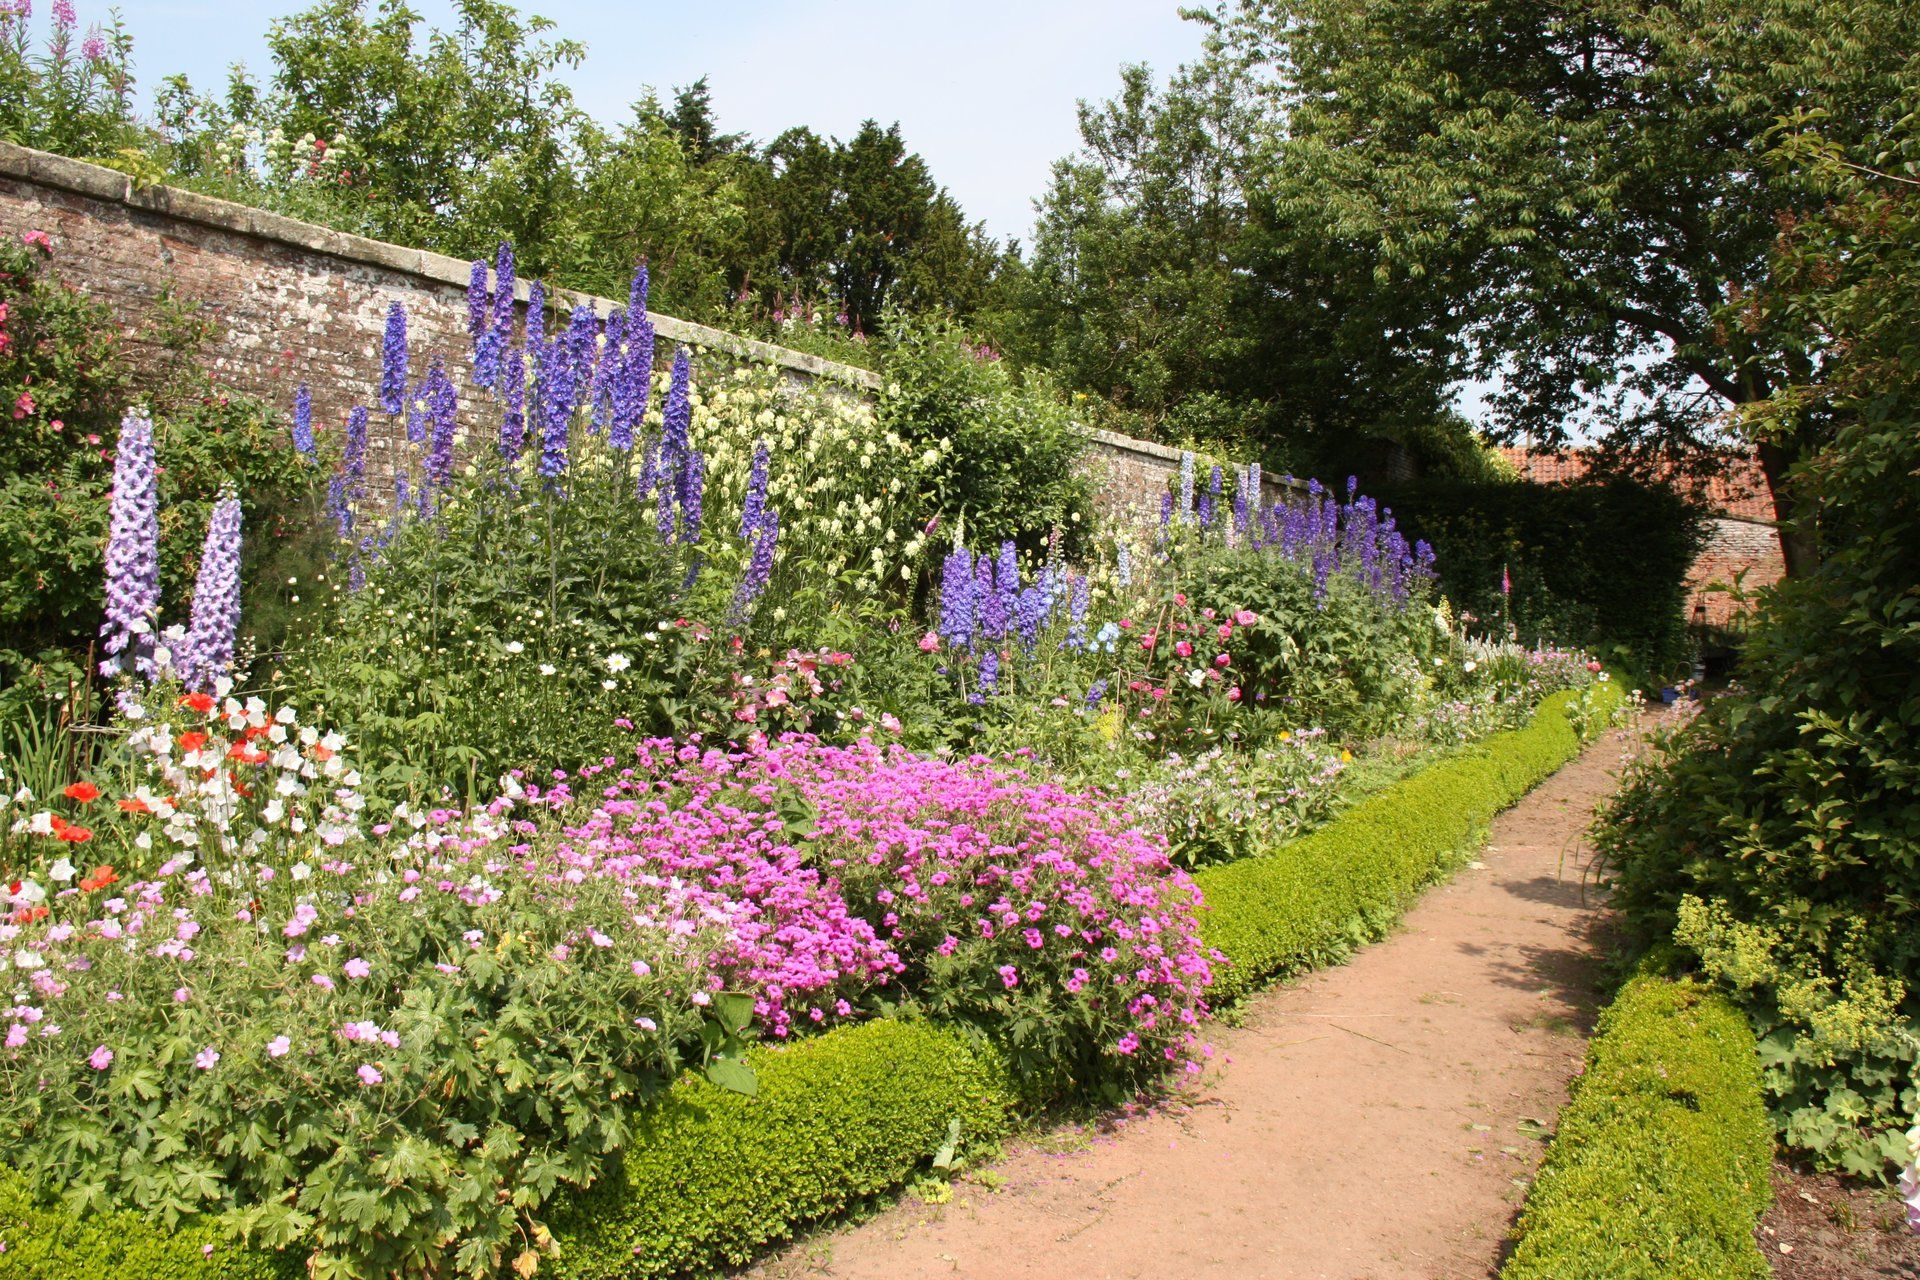 Borders in bloom in the walled garden